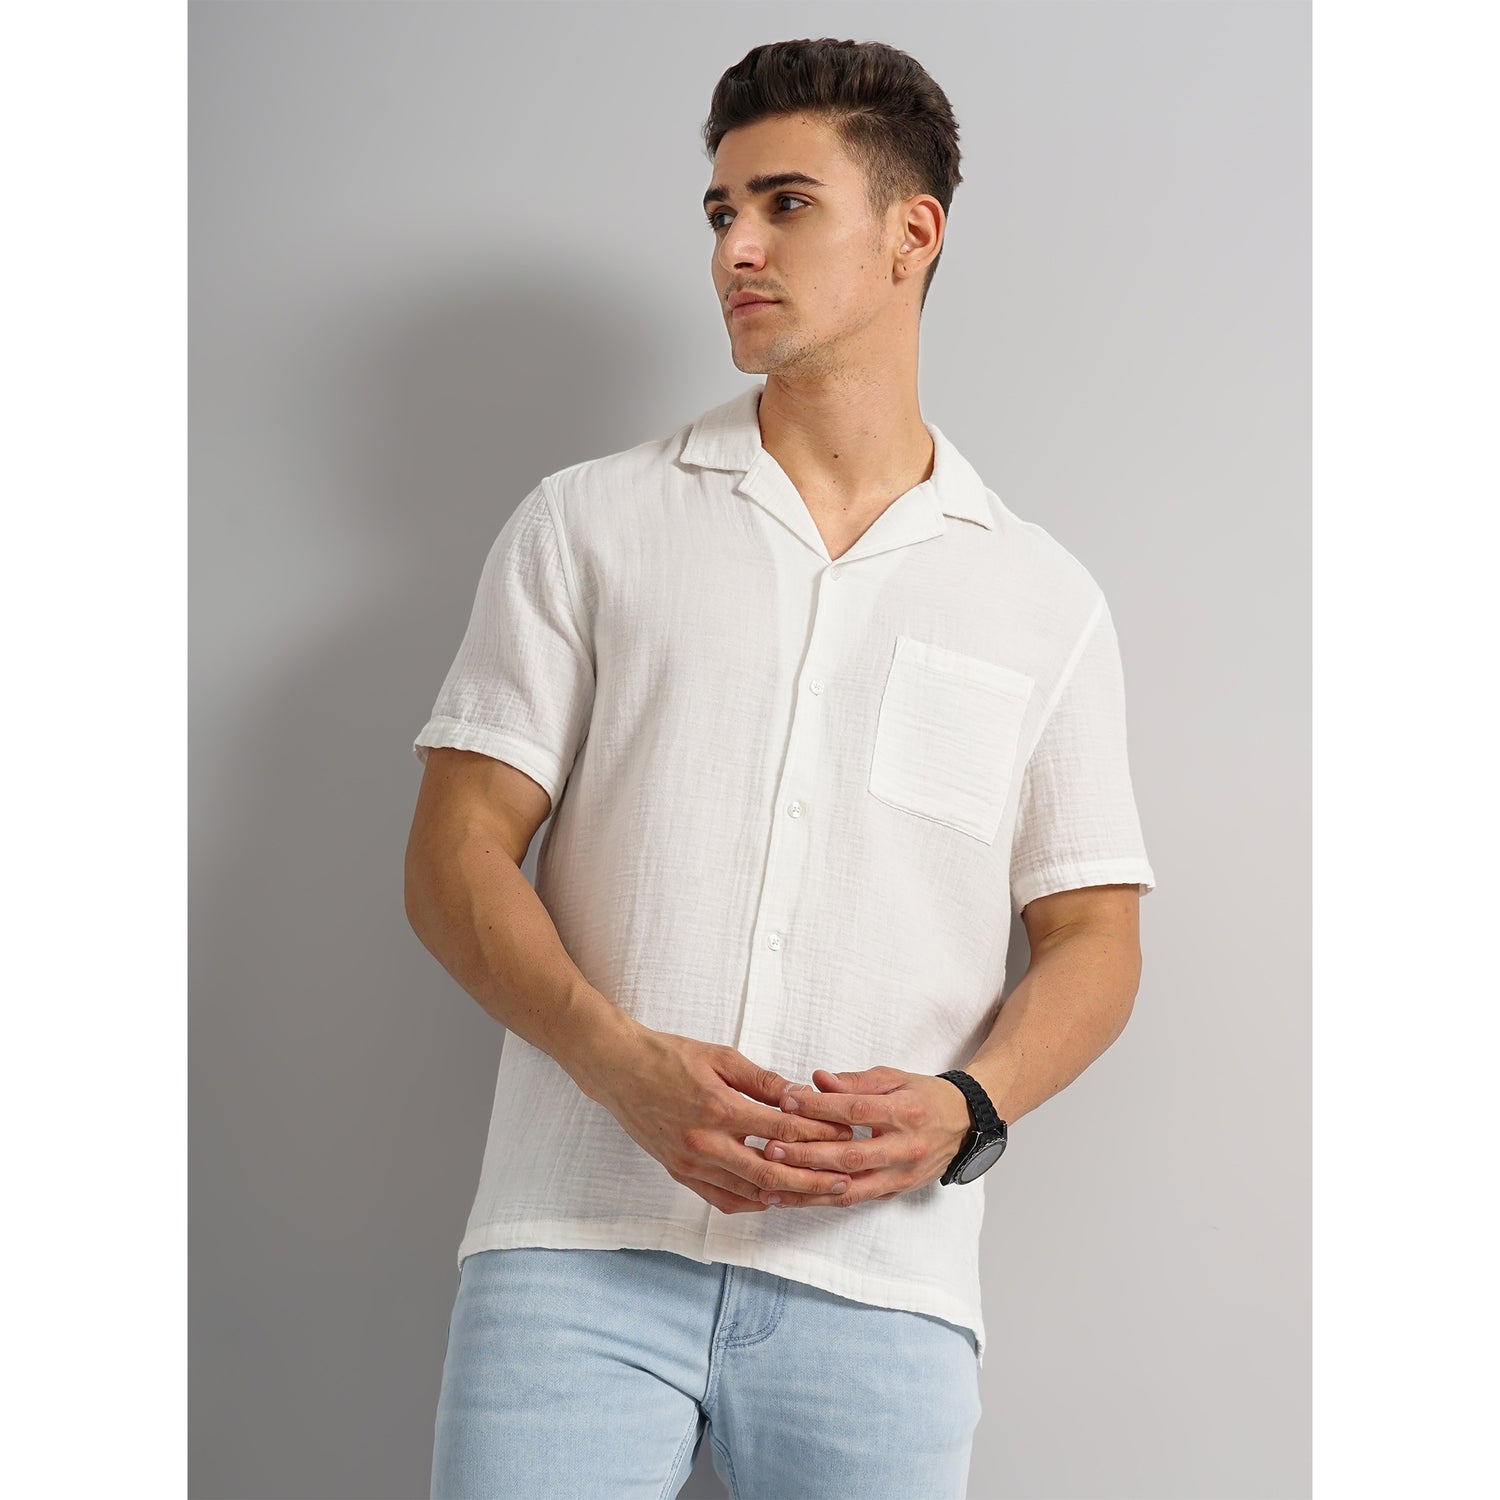 White Cotton Casual Shirt